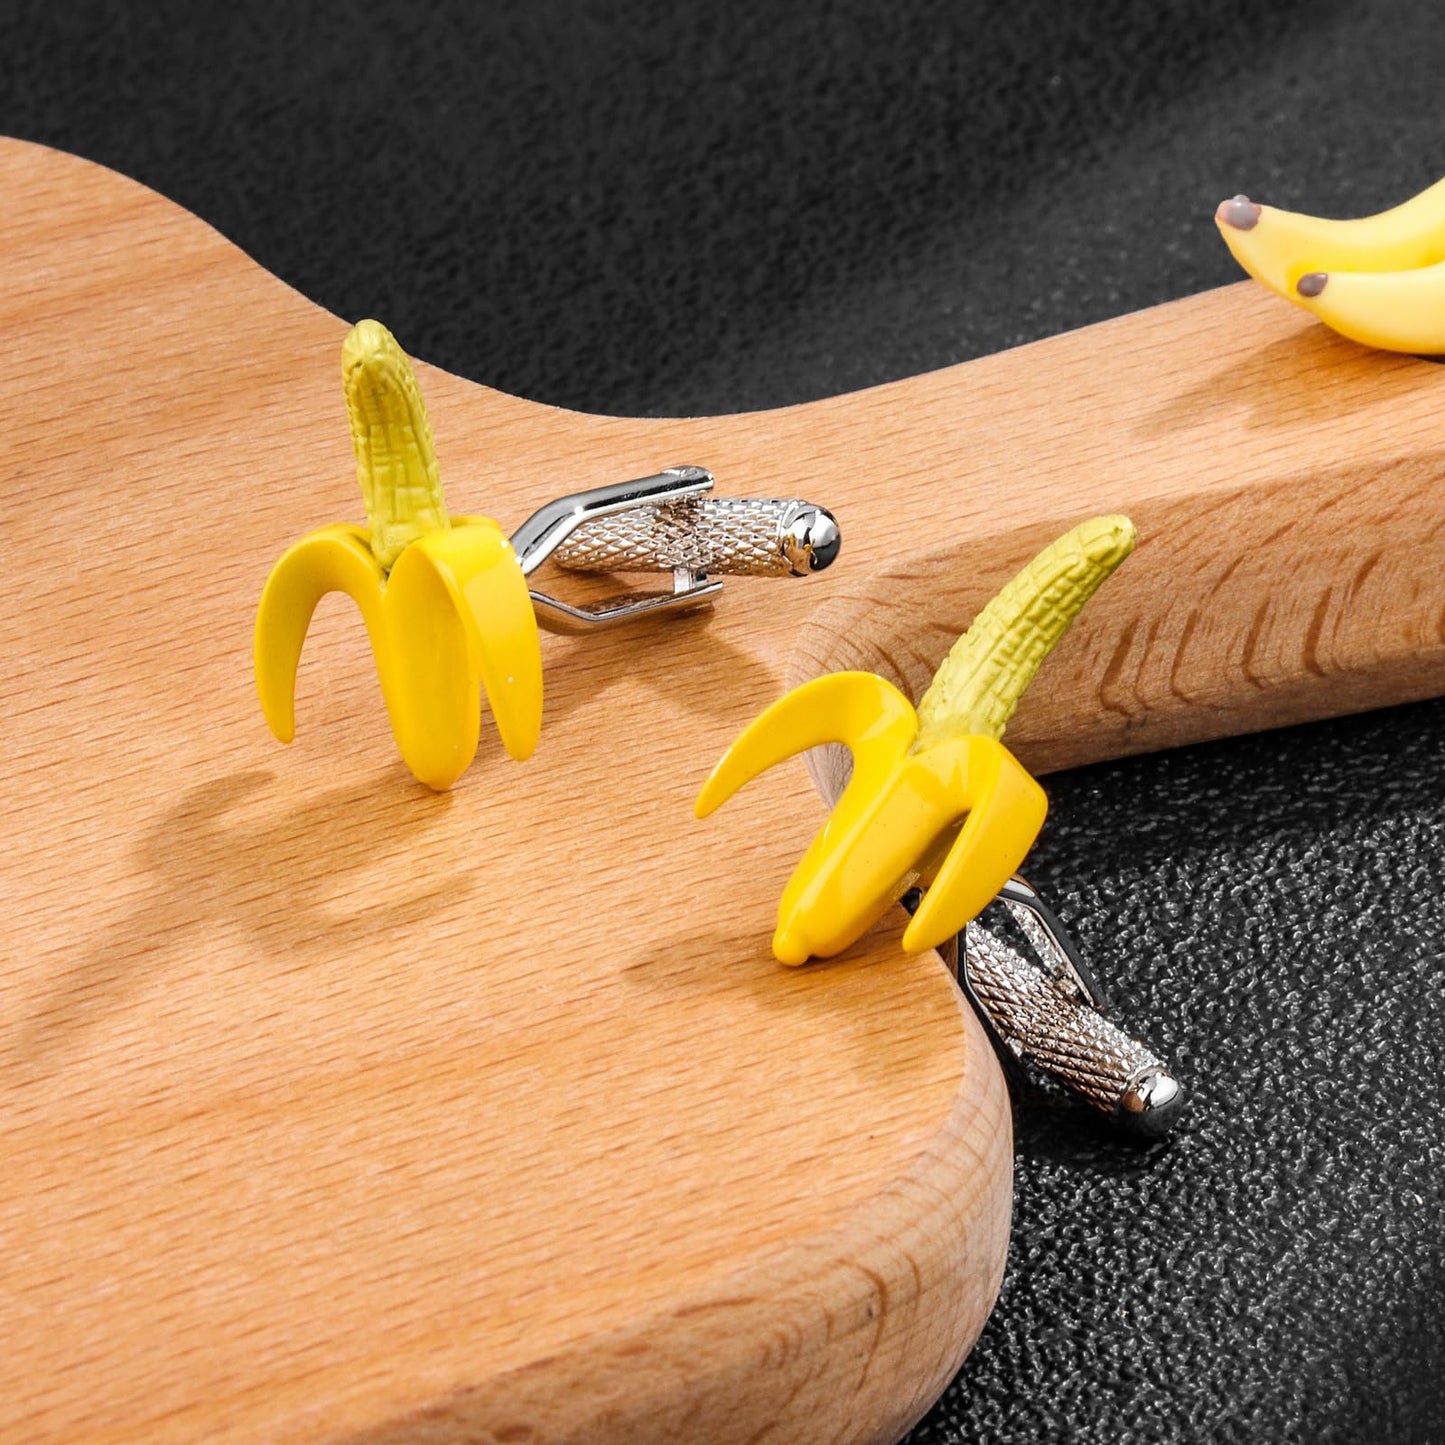 Banana Cufflinks For Men With Gift Box